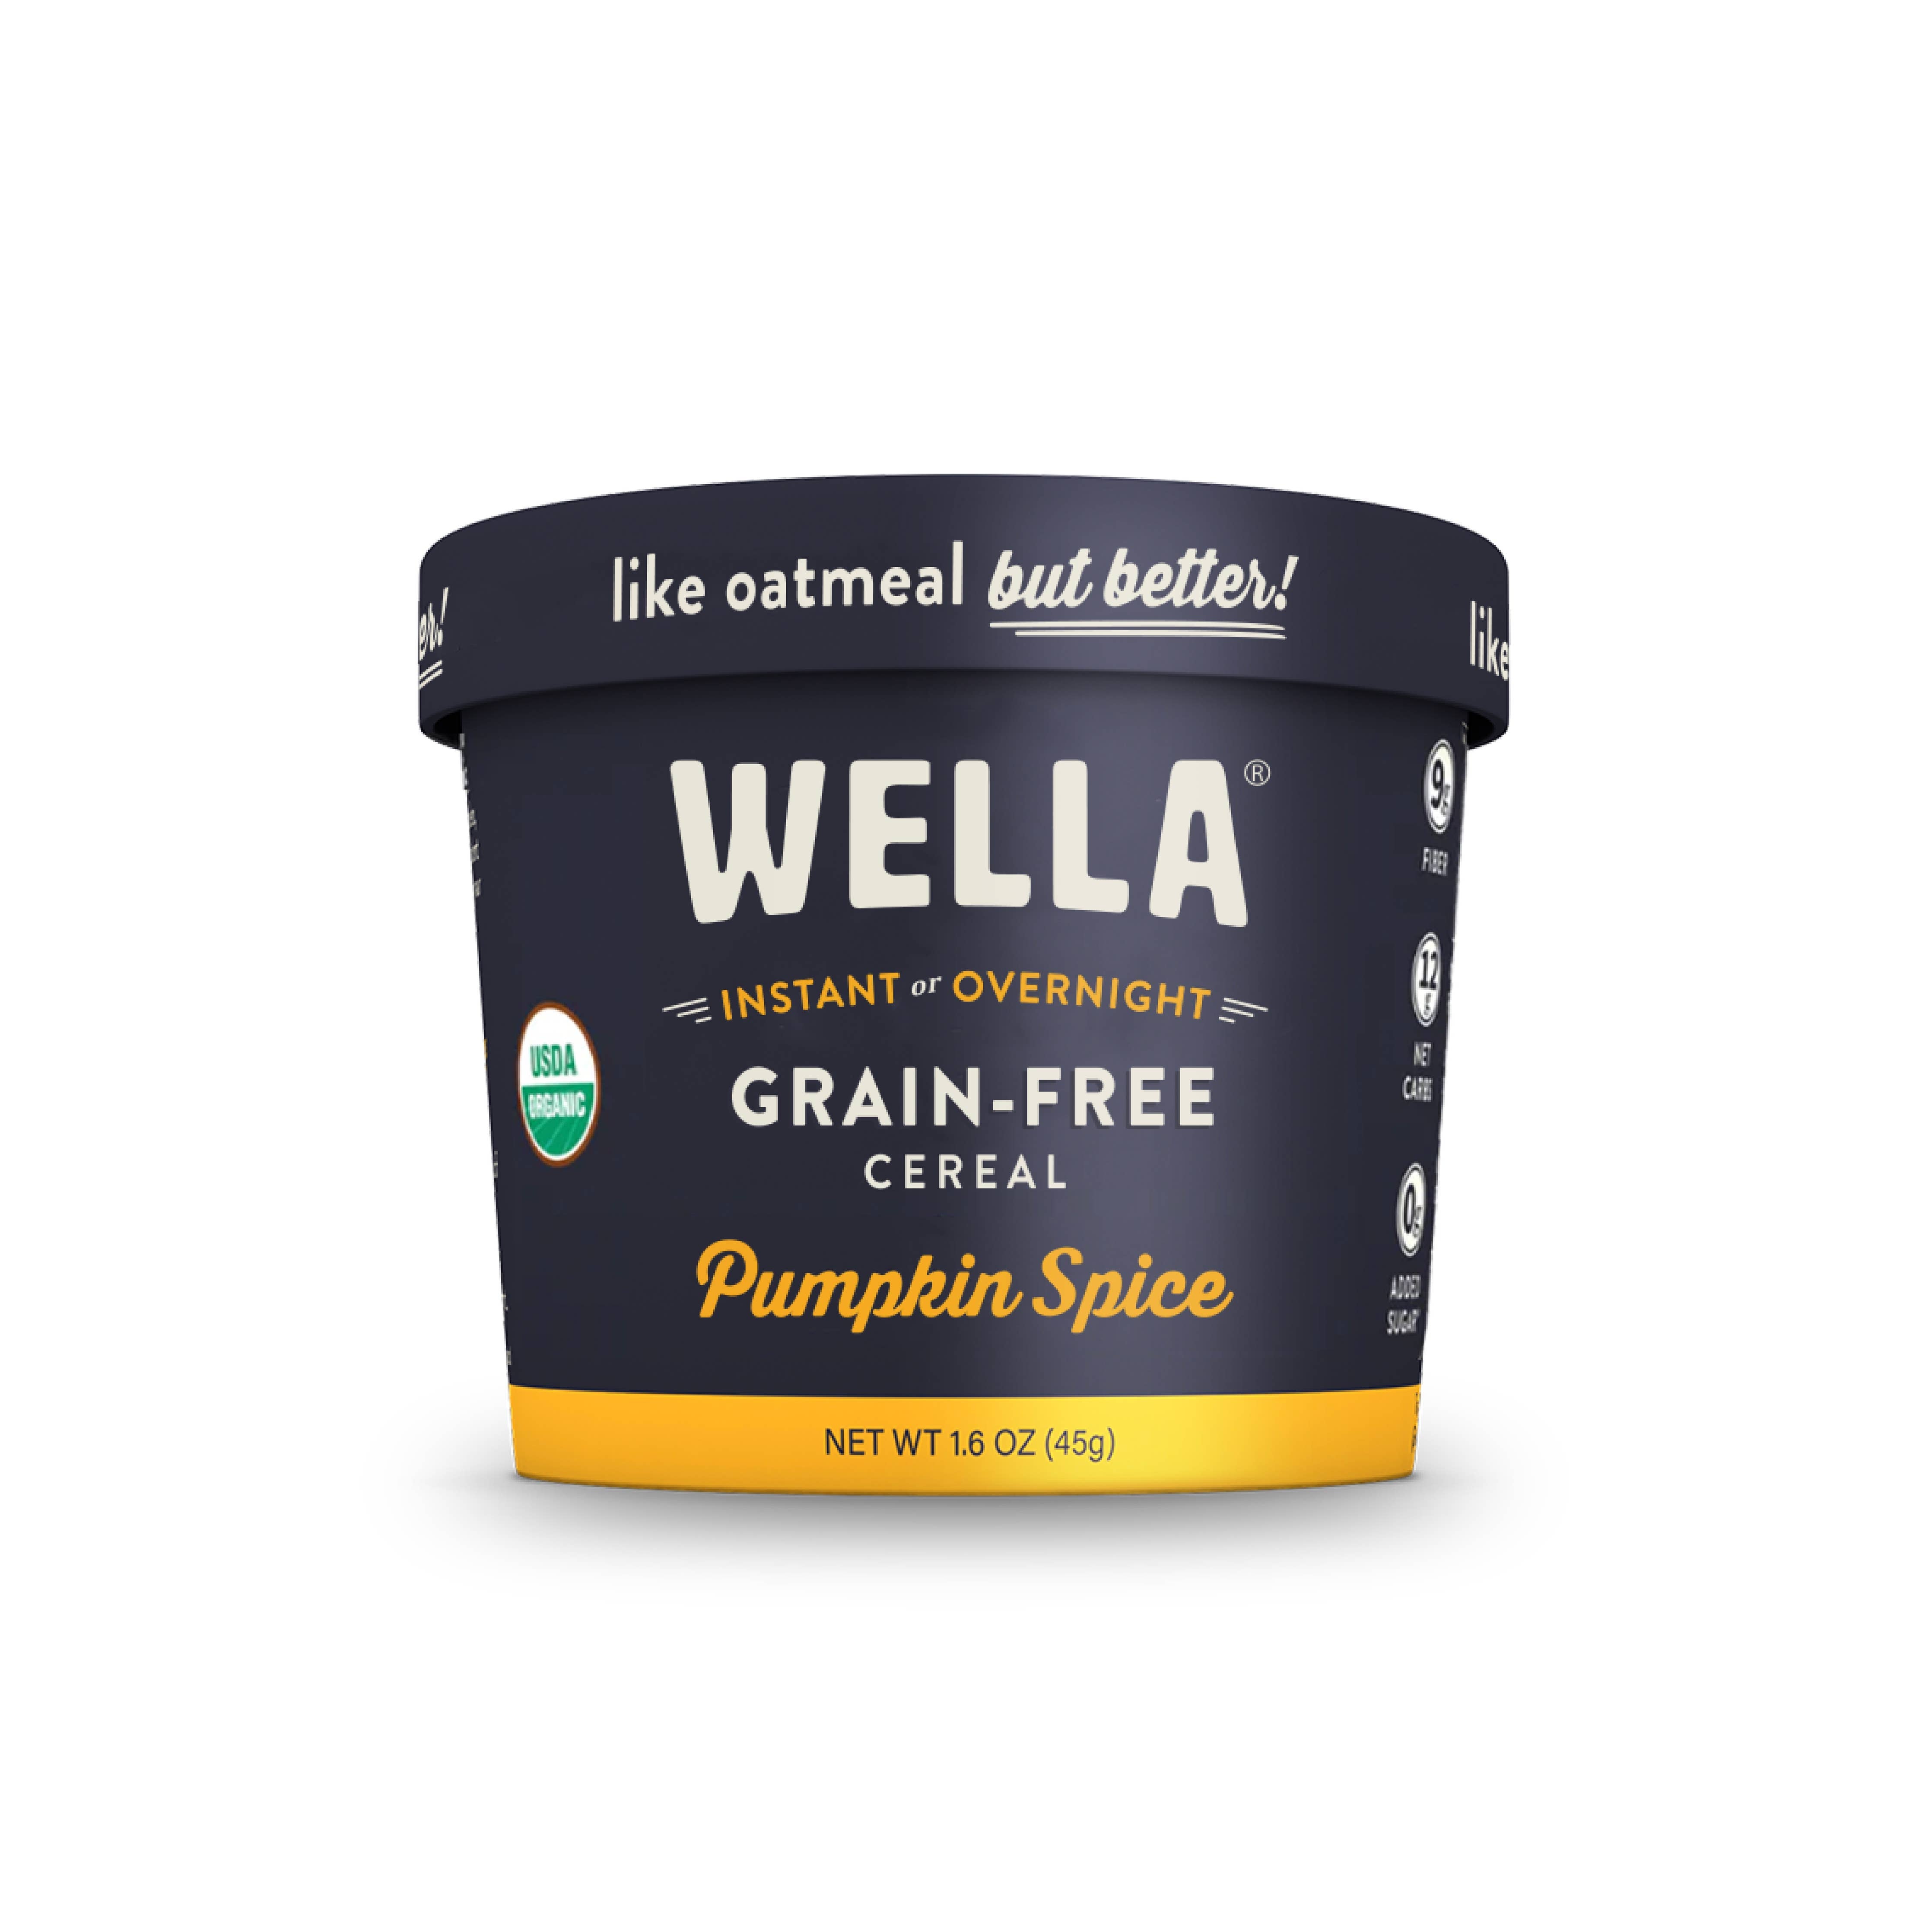 Wella Grain-Free Cereal Pumpkin Spice Cup